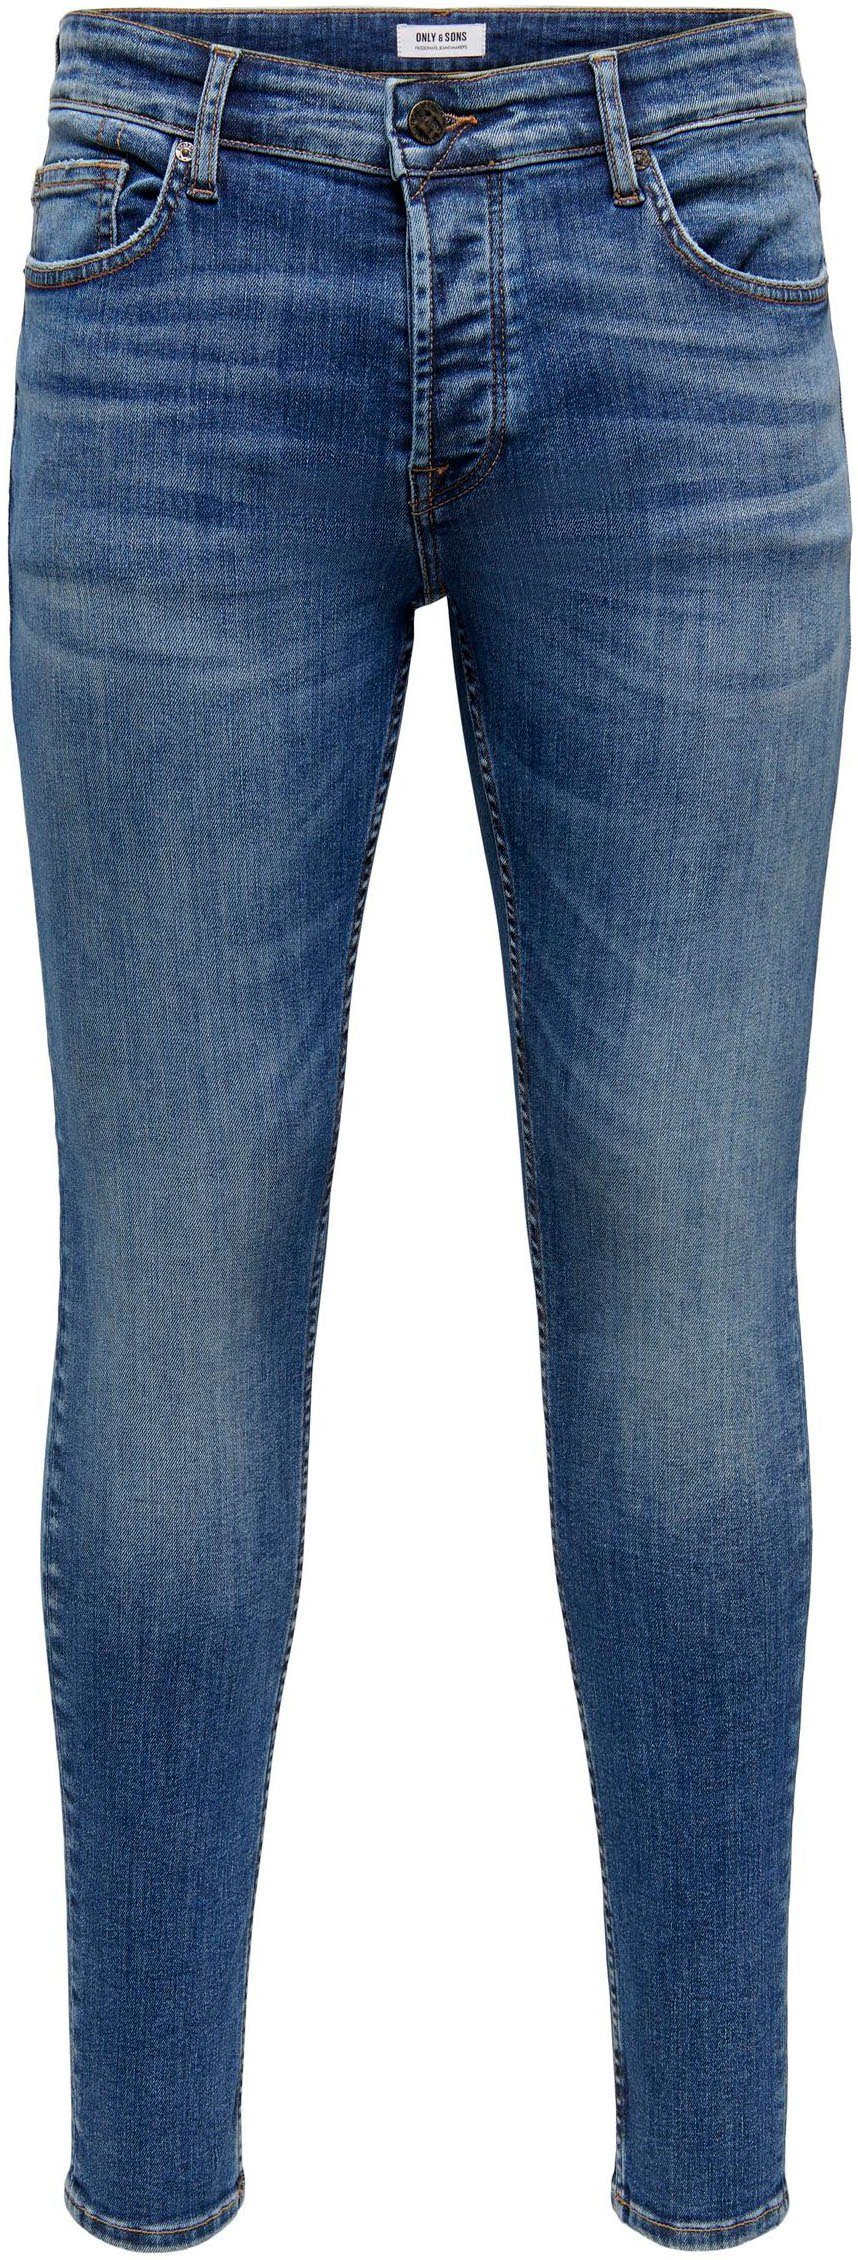 ONLY & SONS Skinny-fit-Jeans denim Warp blue